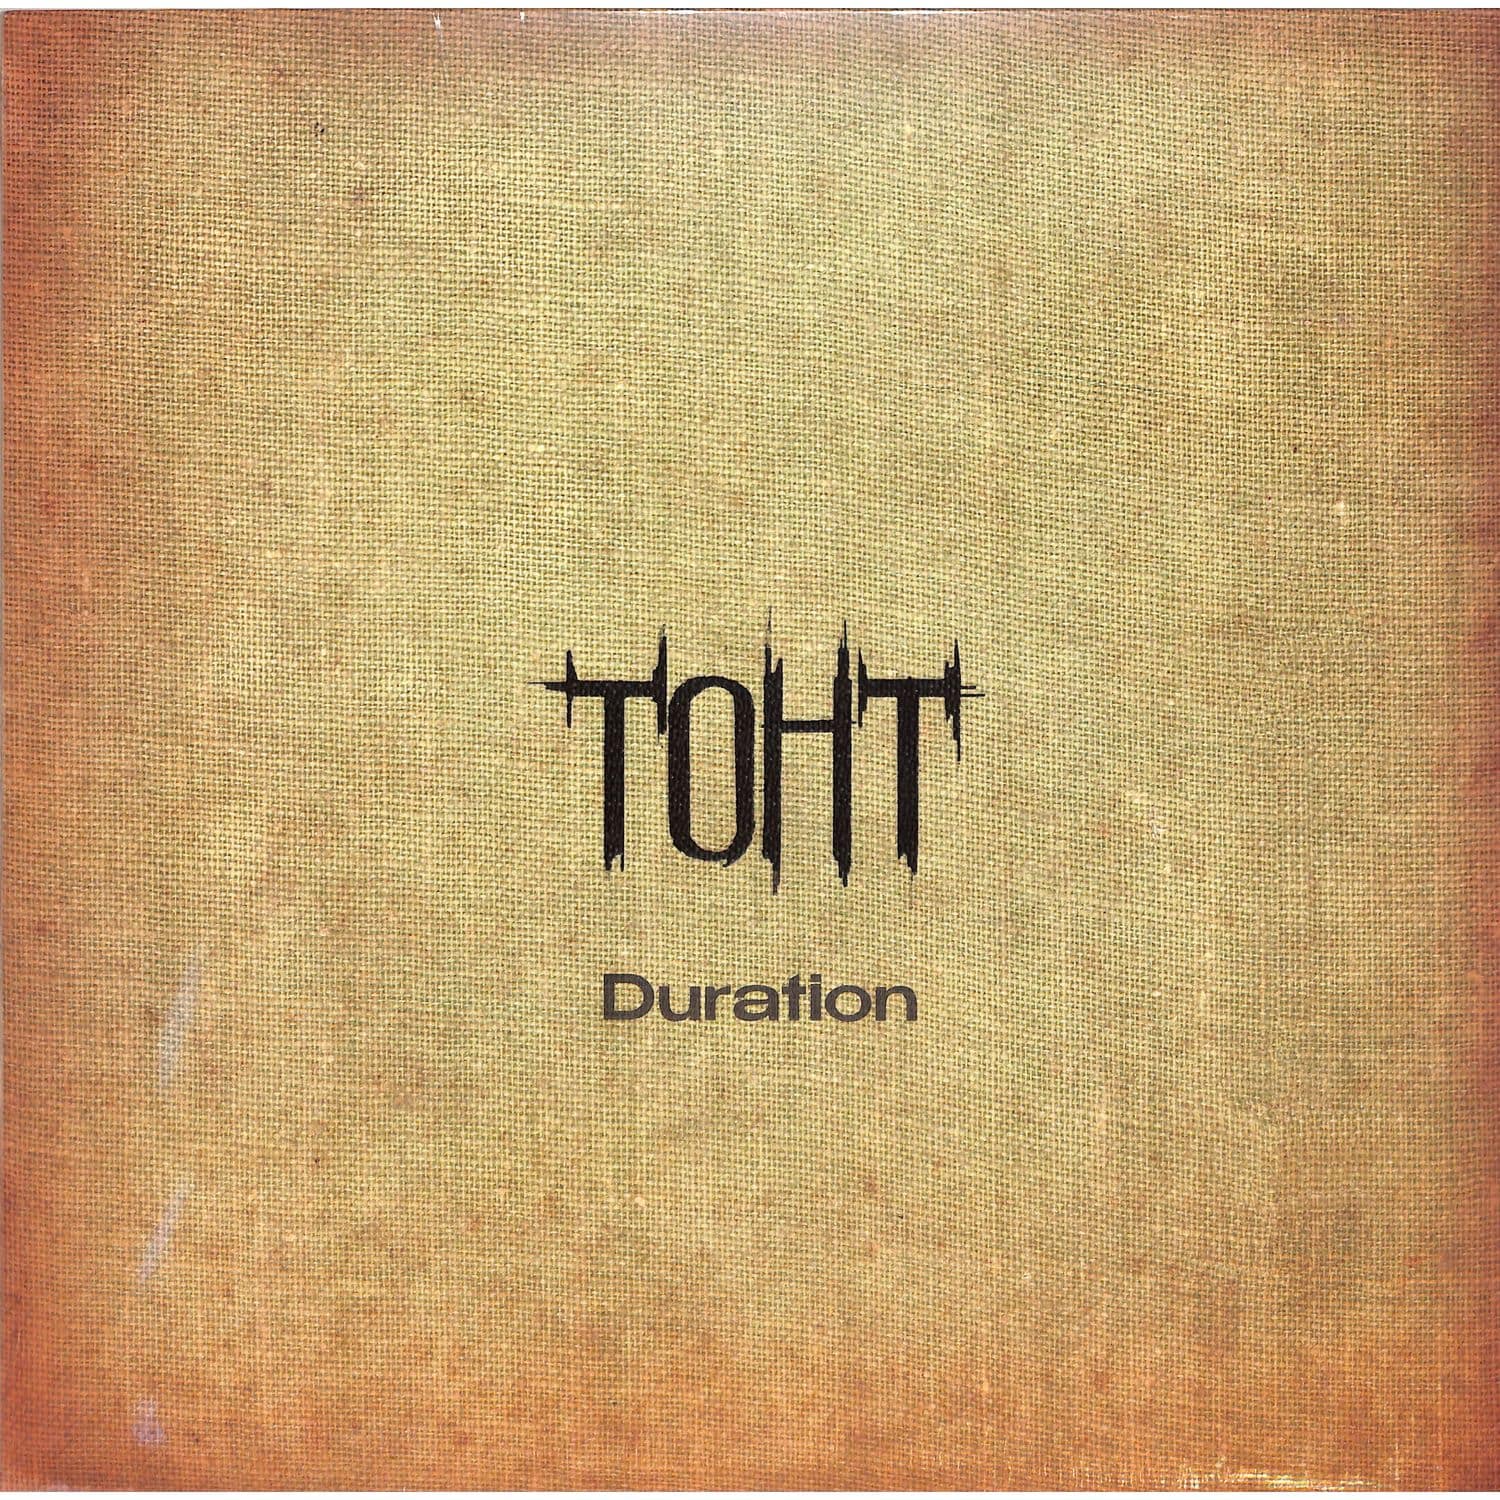 TOHT - Duration 